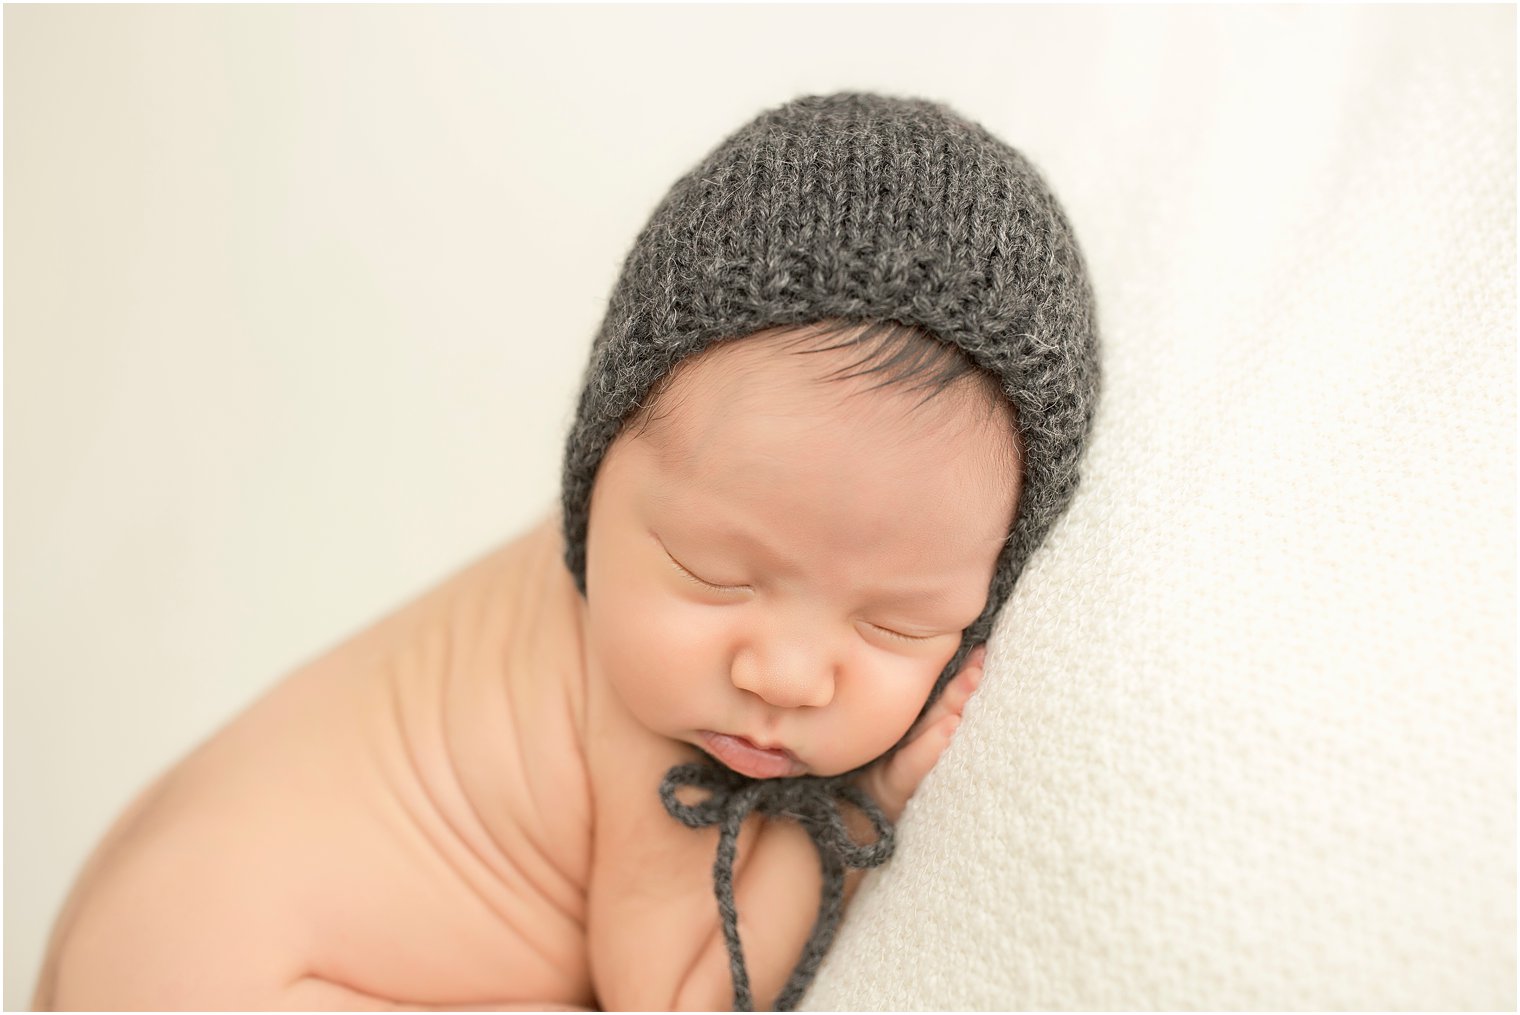 Sleepy baby boy in gray hat | Photo by Idalia Photography